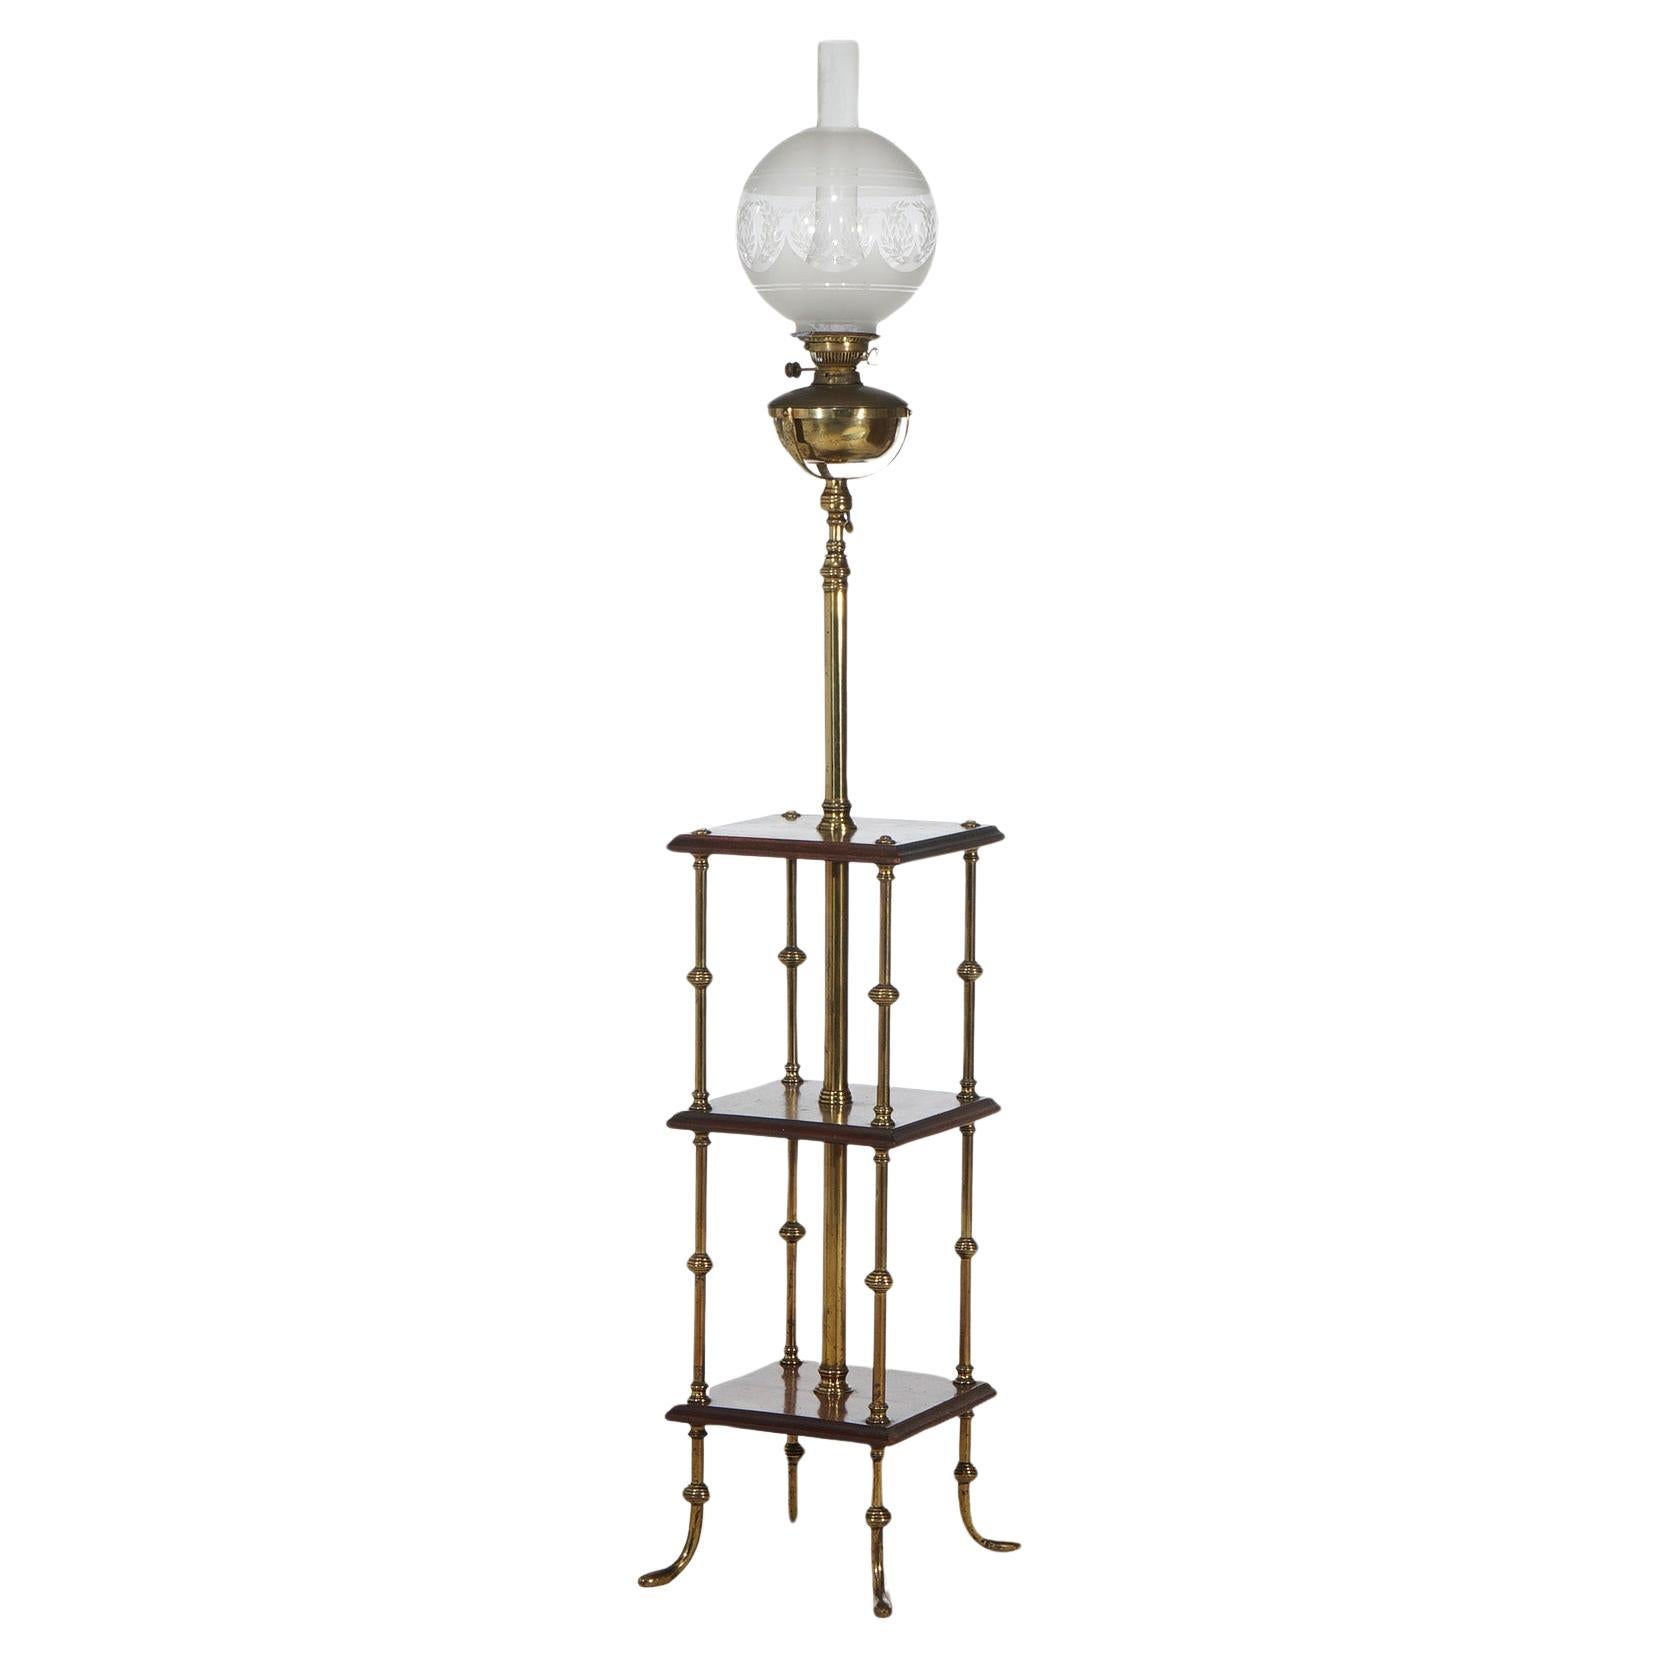 Antique Neoclassical Mahogany & Brass Piano Floor Lamp c1890